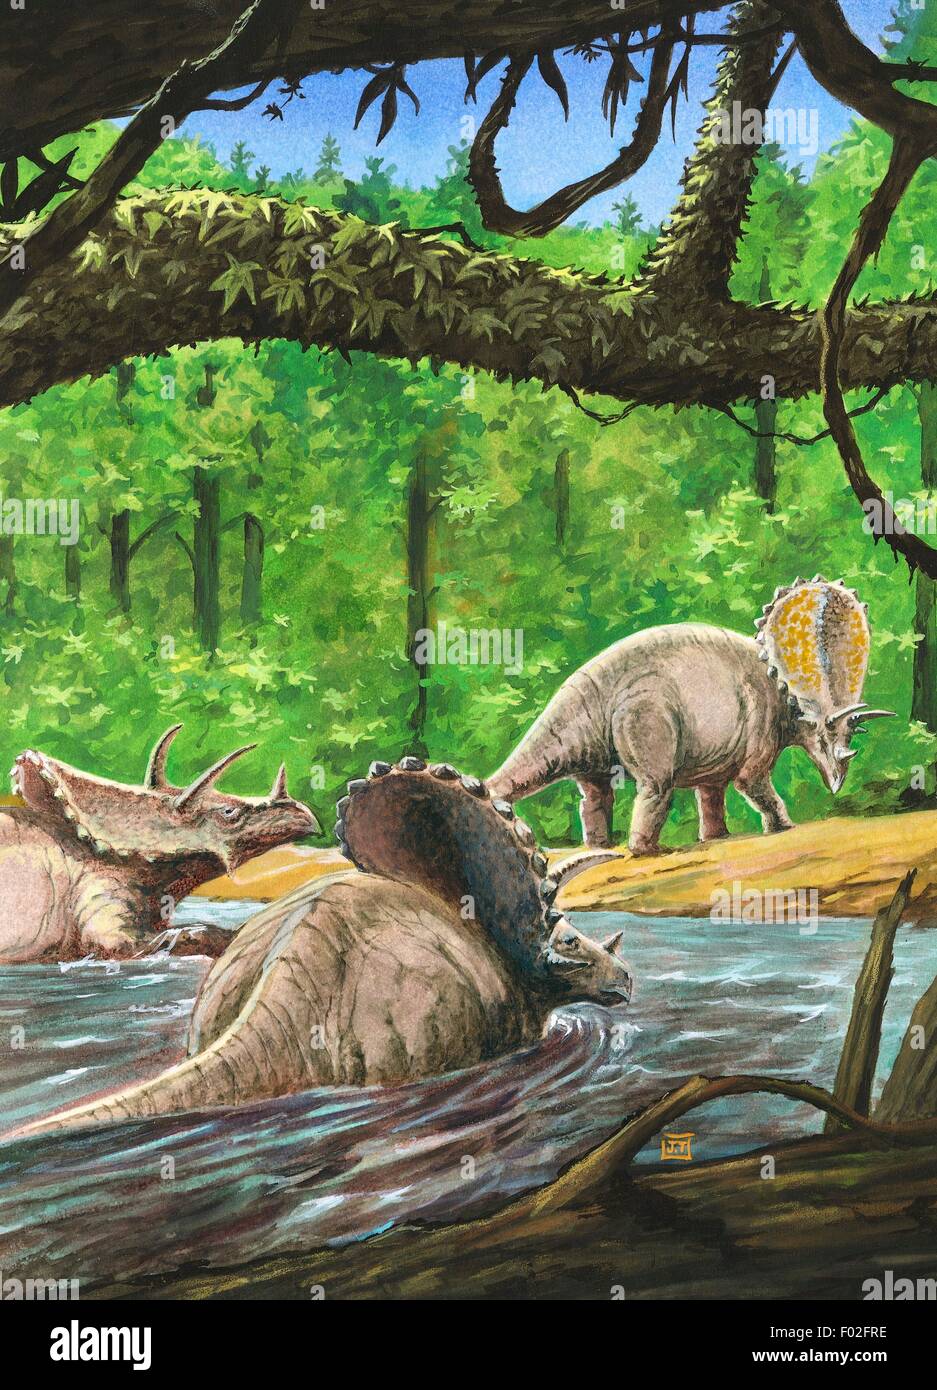 Pentaceratops sternbergii, Ceratopsidae, Late Cretaceous. Artwork by J Dang. Stock Photo